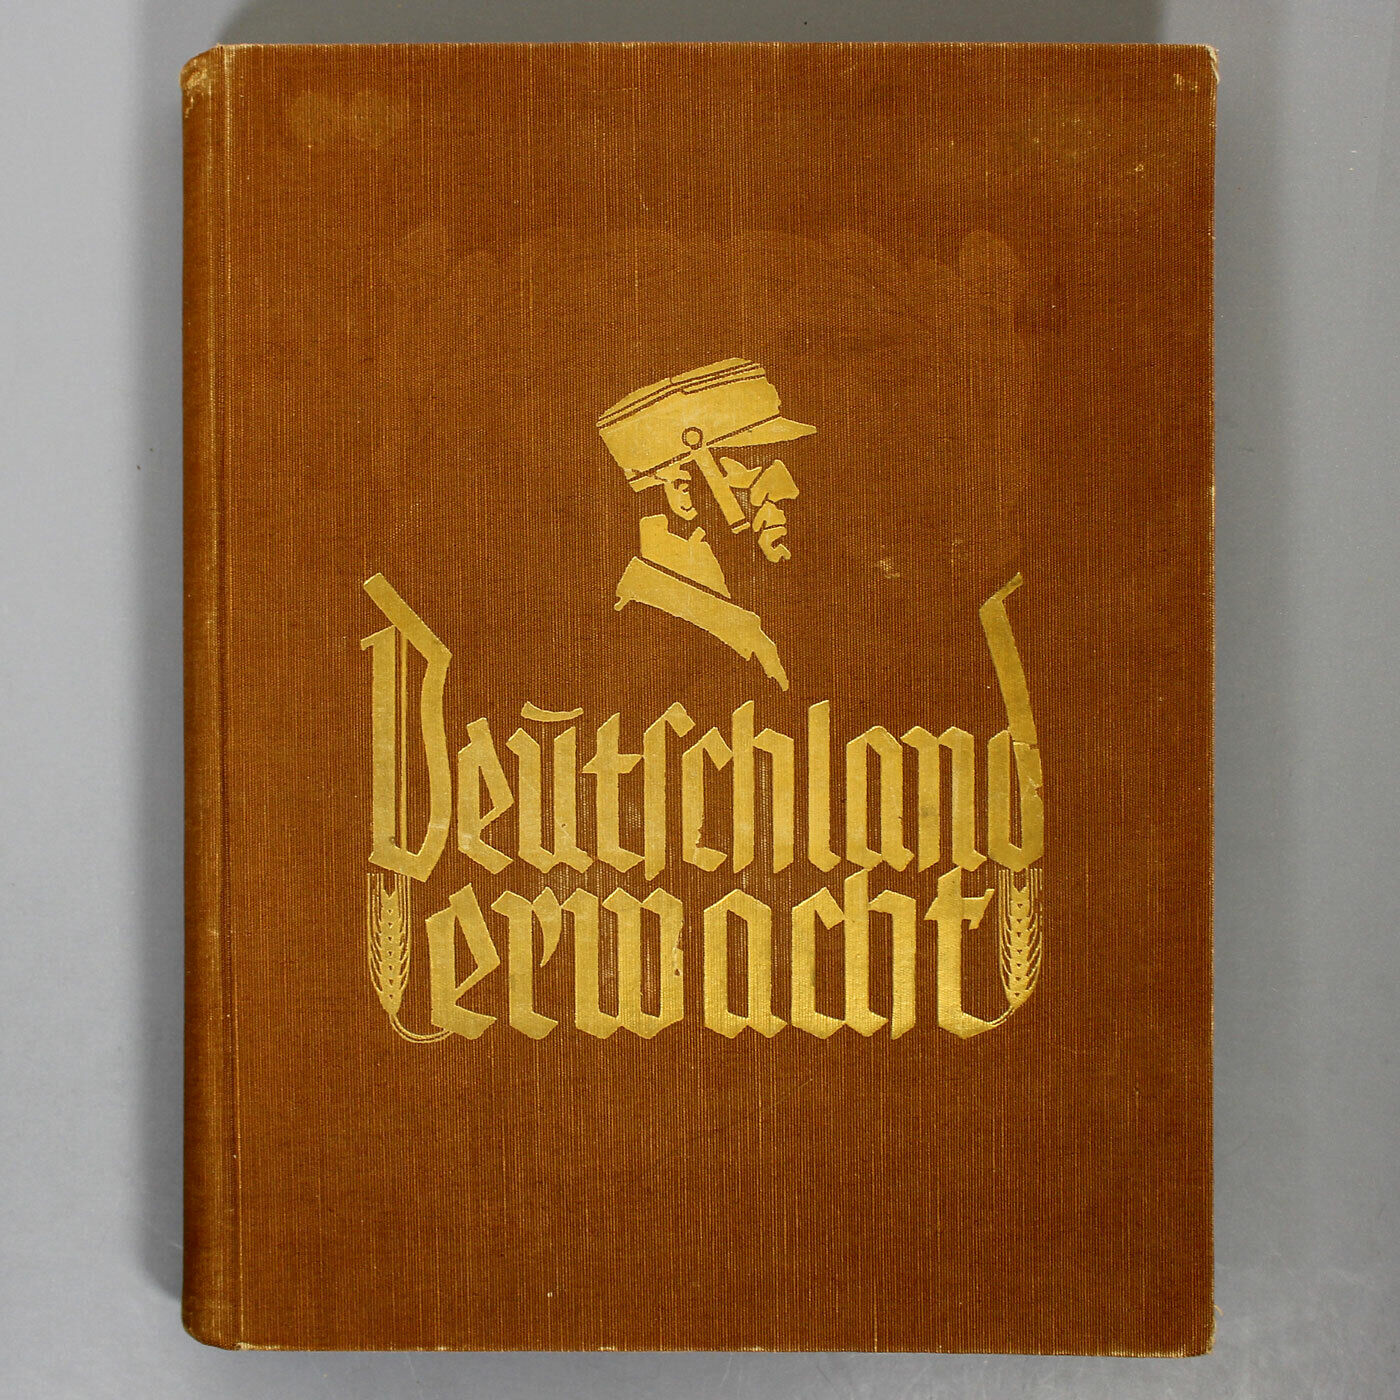 DEUTSCHLAND ERWACHT (Germany Awakes) - 1933 - Nazi Cigarette Card Album